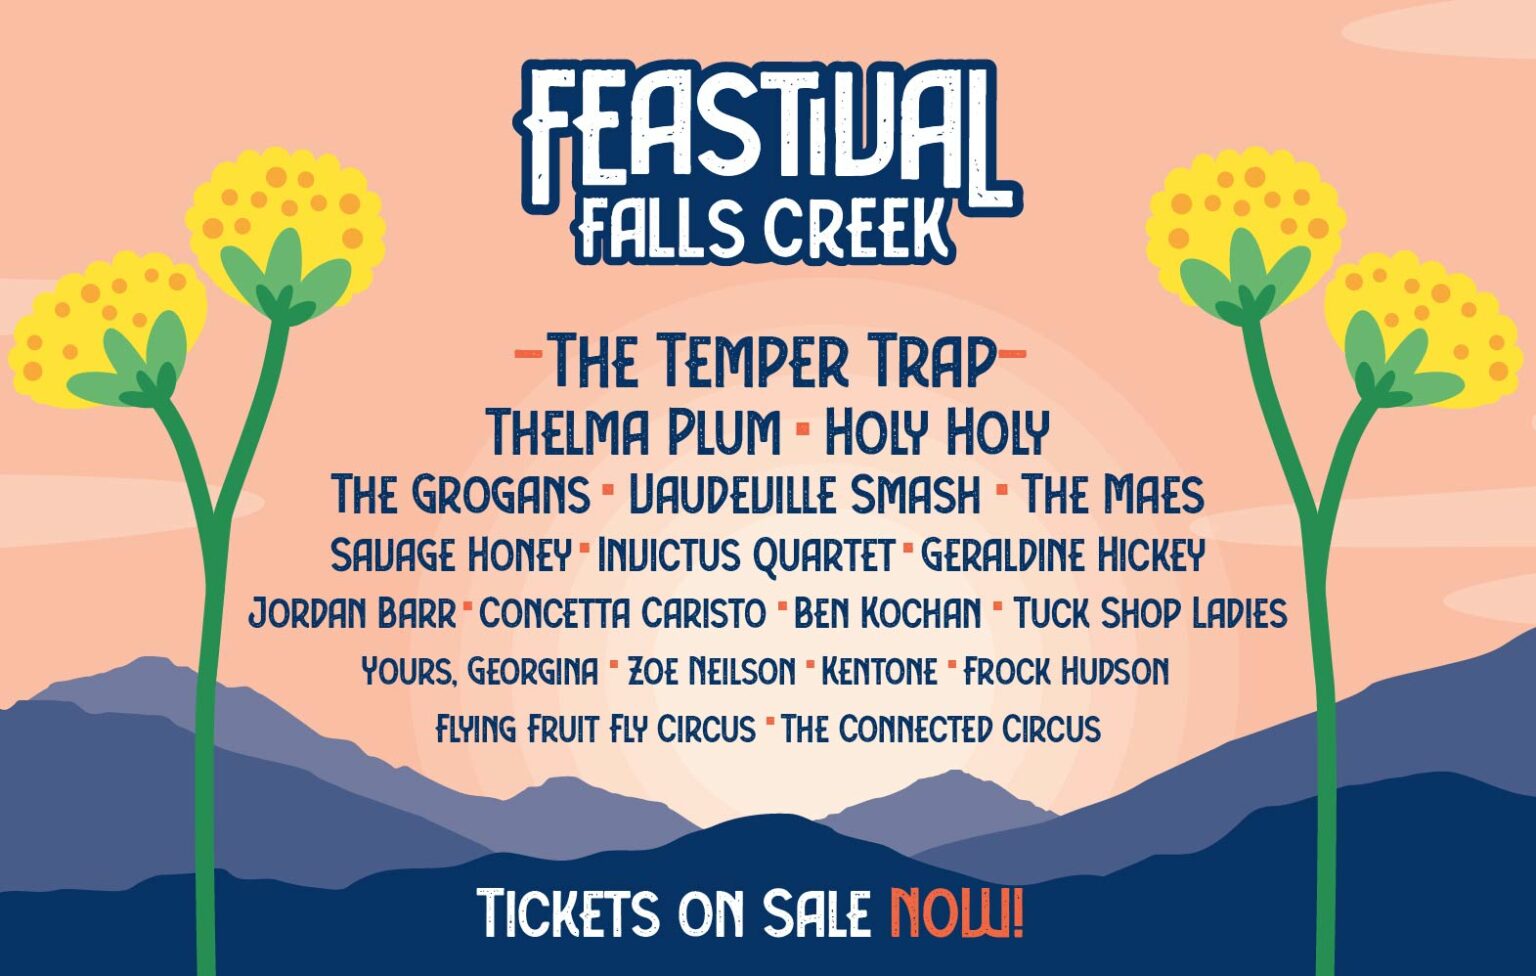 FEASTIVAL Falls Creek Tickets On Sale Now! Falls Creek Alpine Resort